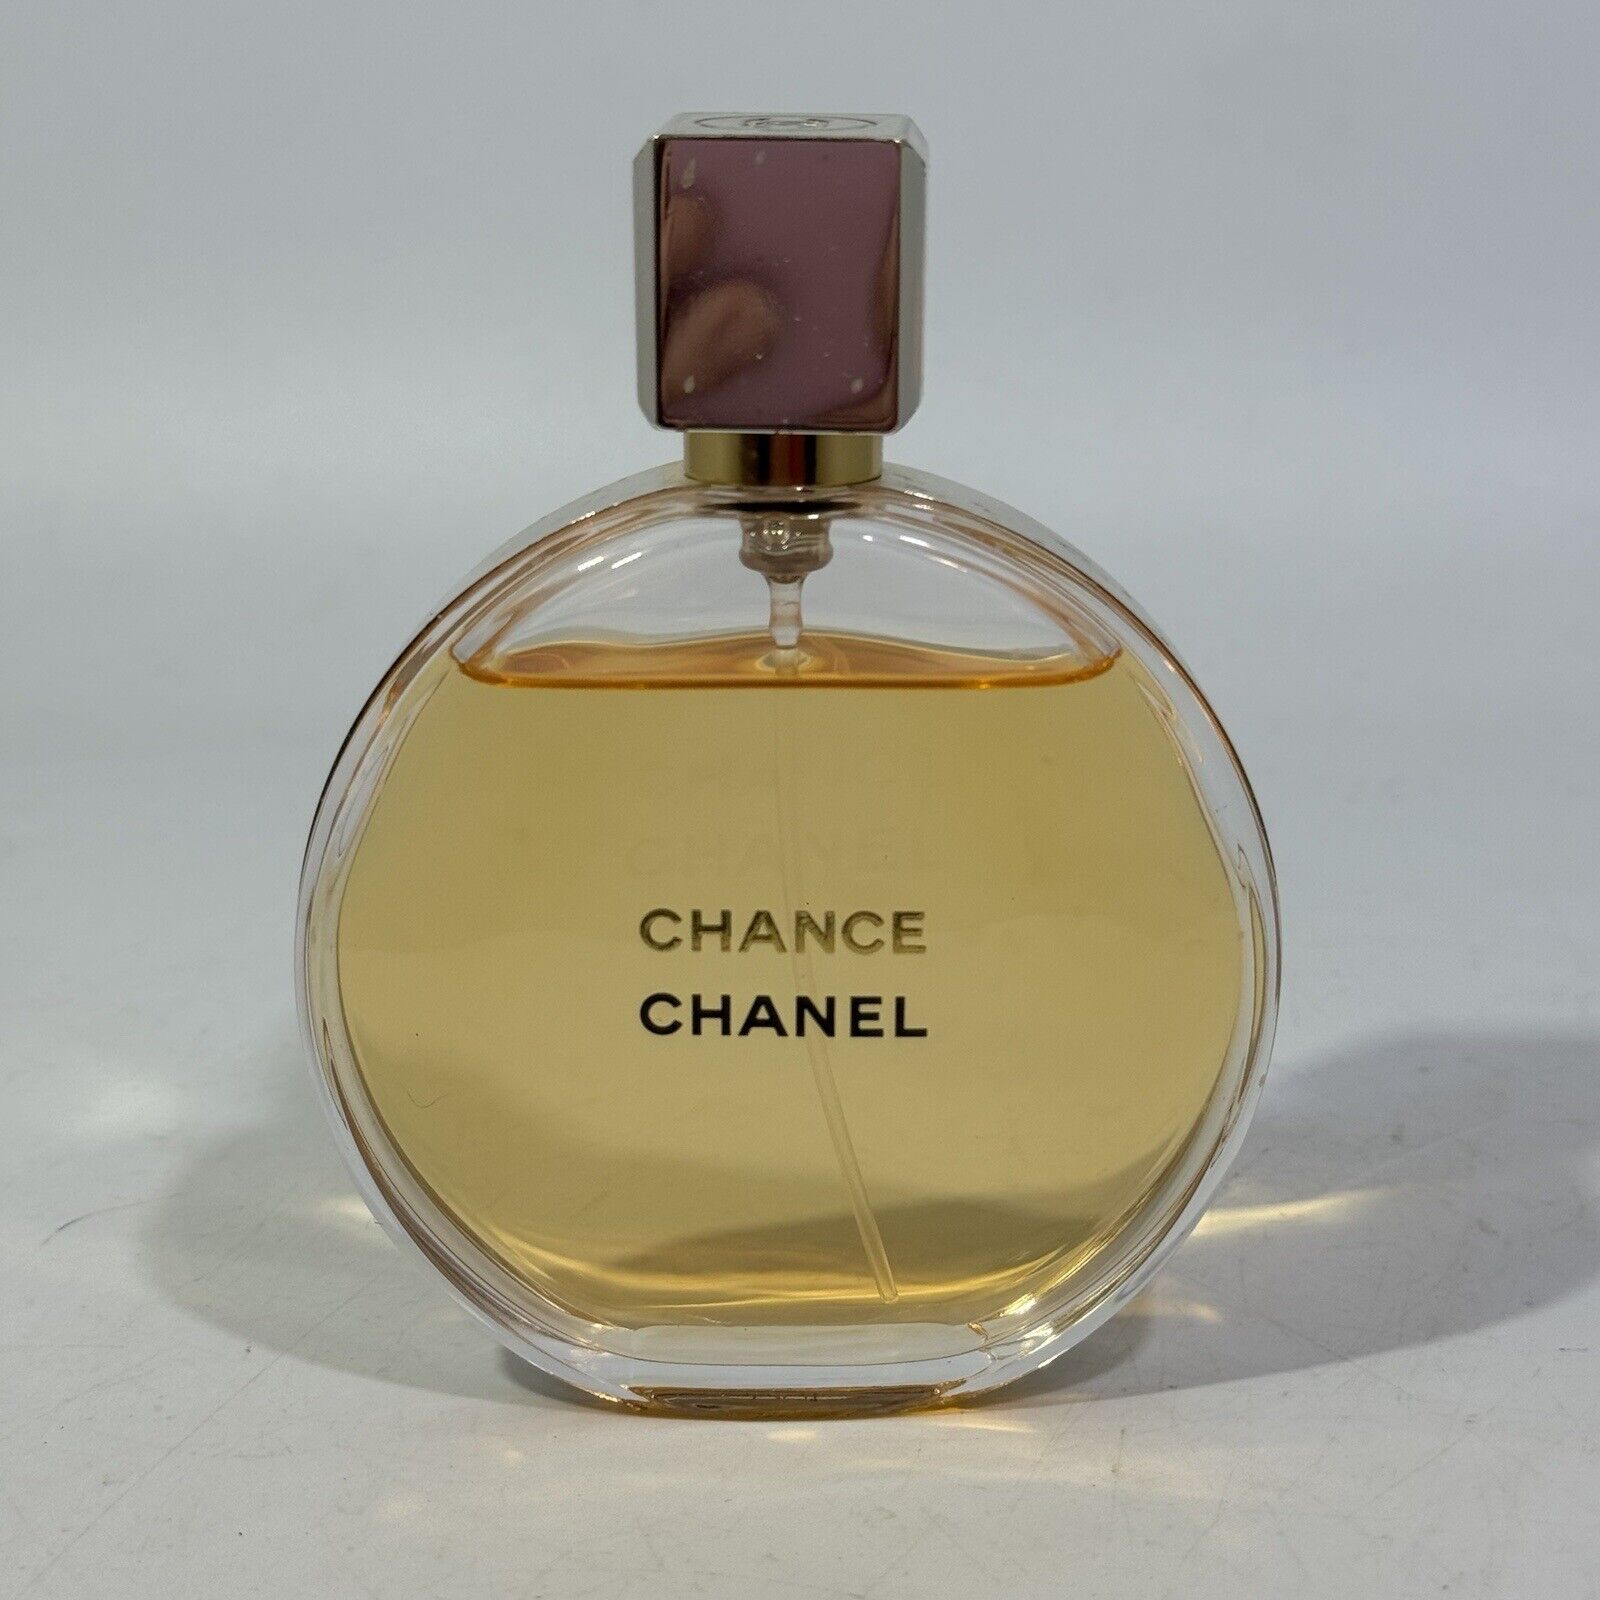 Chanel Chance Eau De Parfum 3.4 oz - Women’s Perfume. No Box, Almost Full